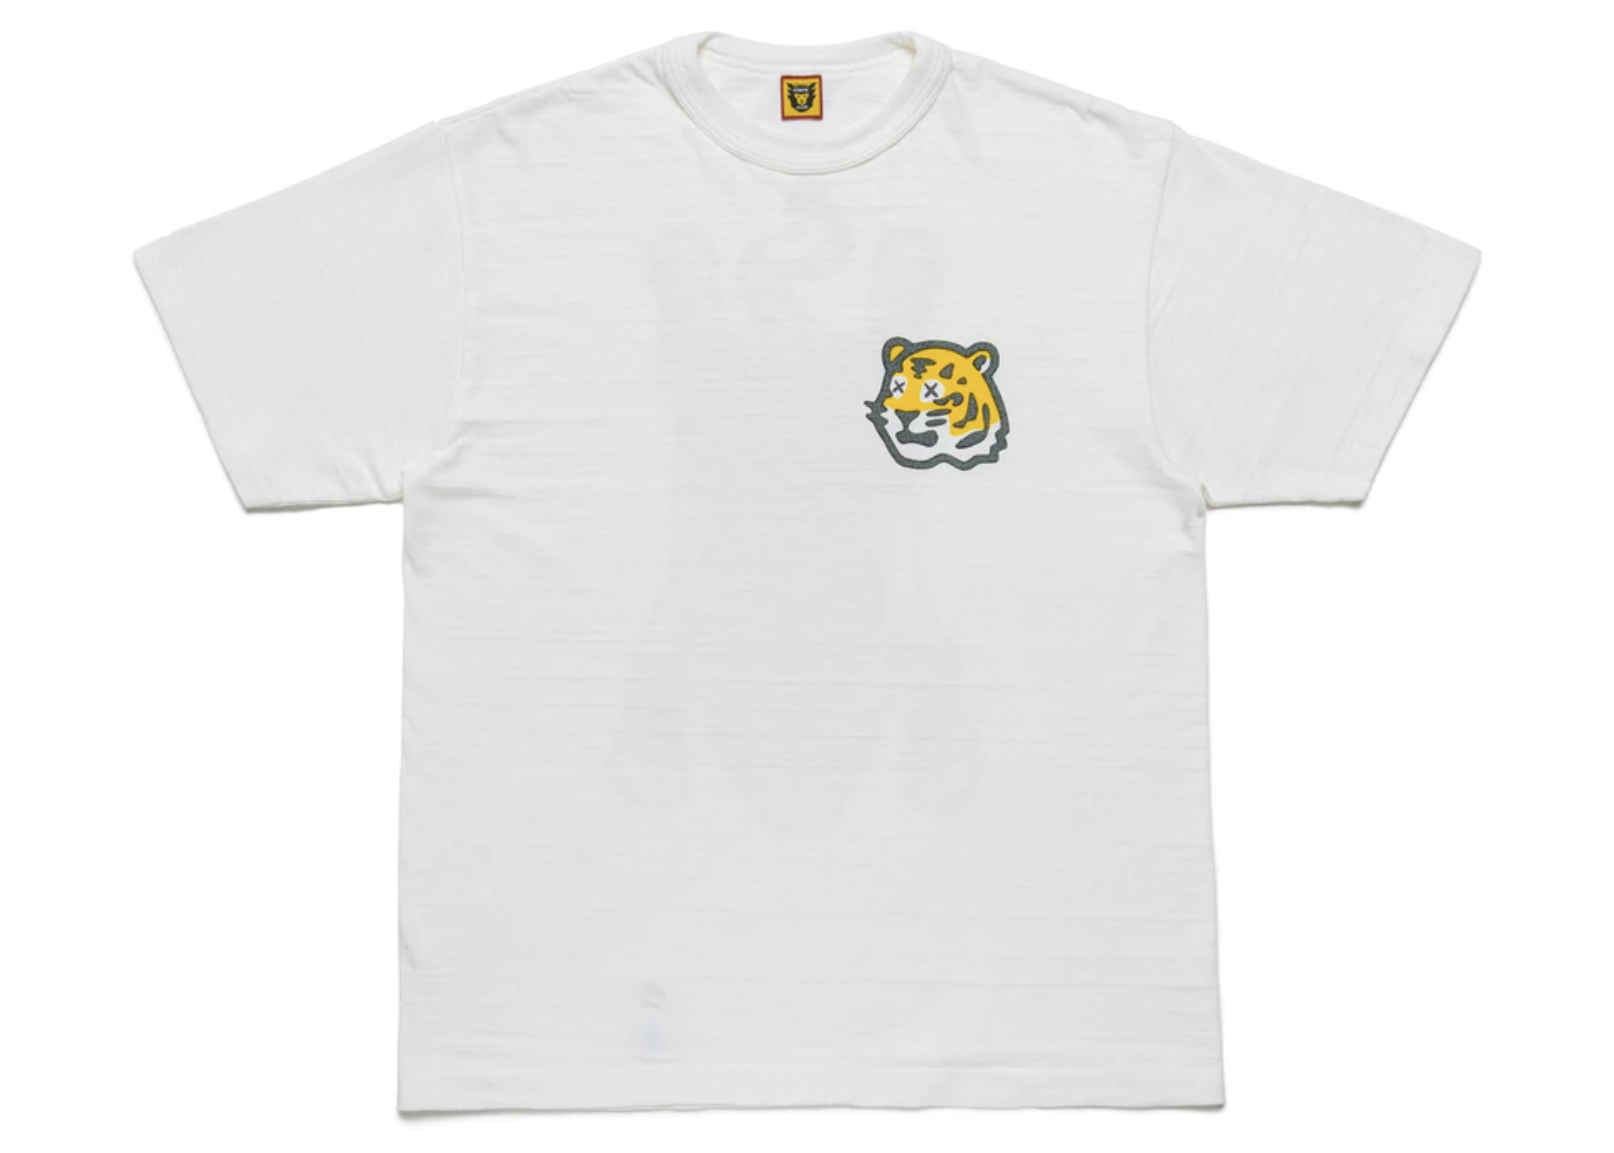 Human Made x KAWS #4 T-shirt White